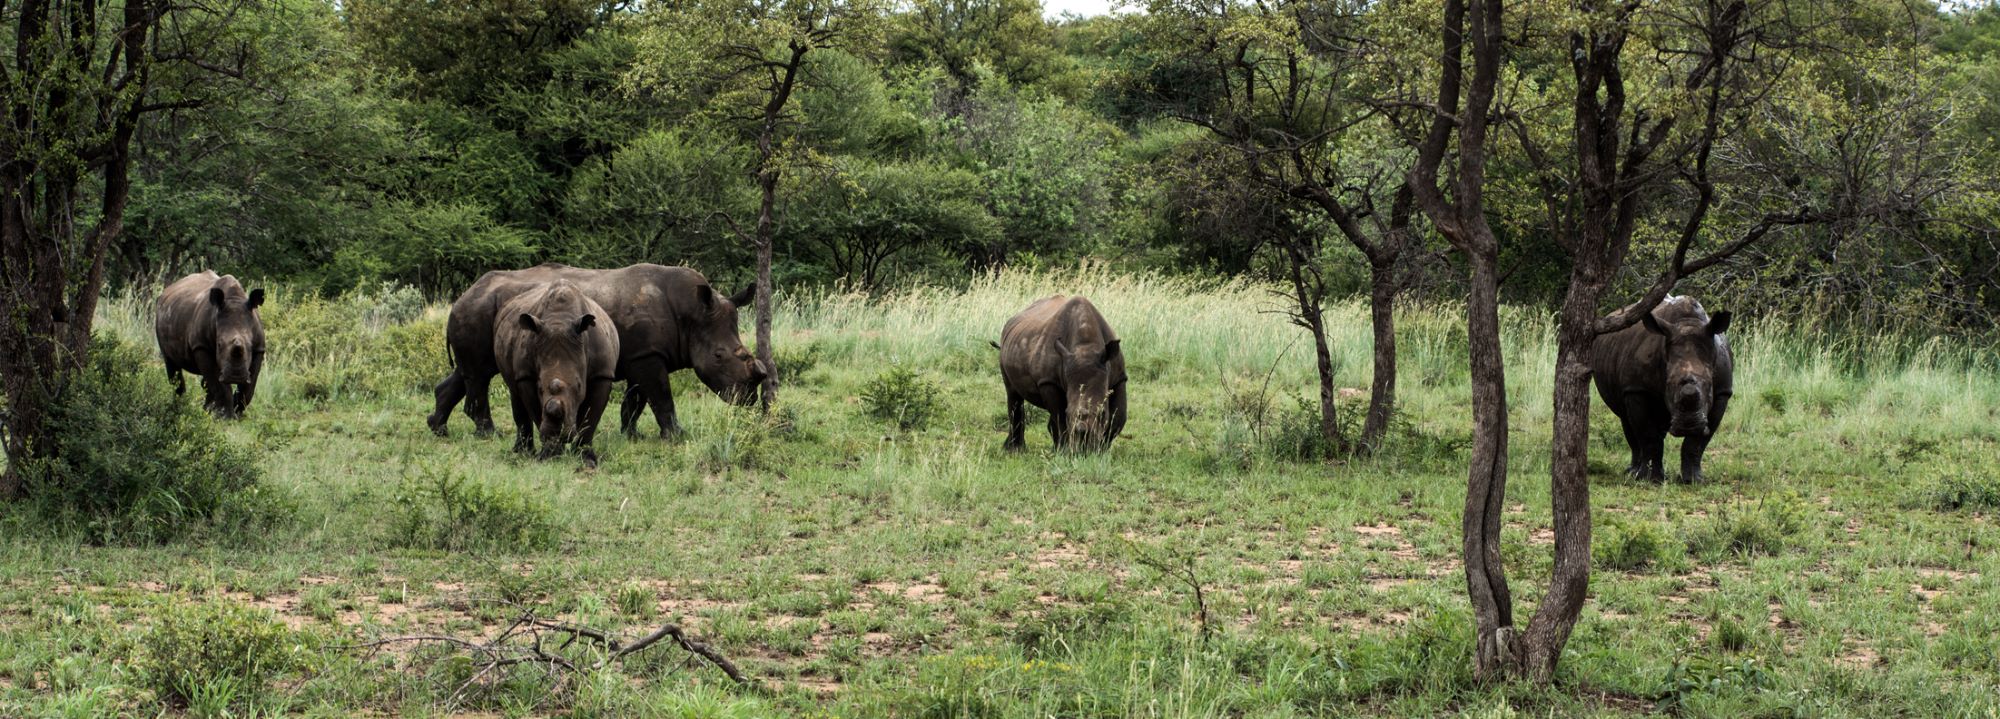 grazing wildlife in south africa credit john lechner